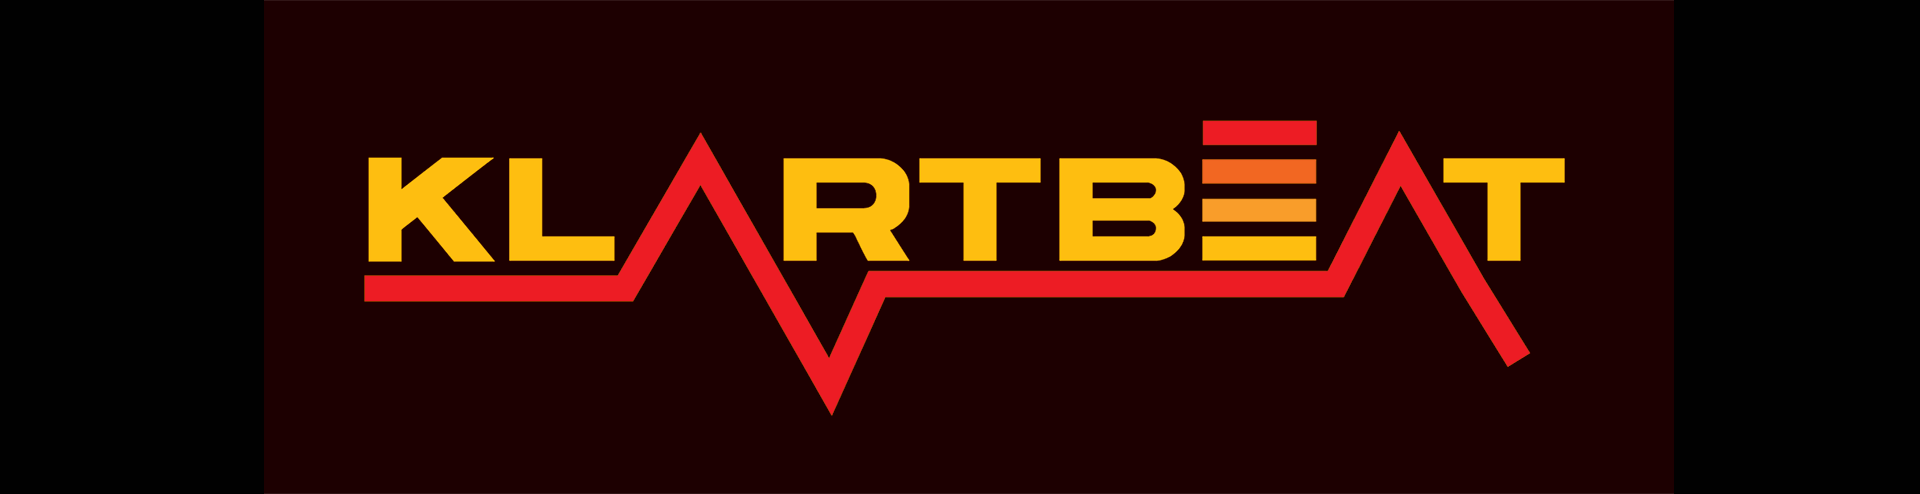 rwcreate | Klartbeat logo